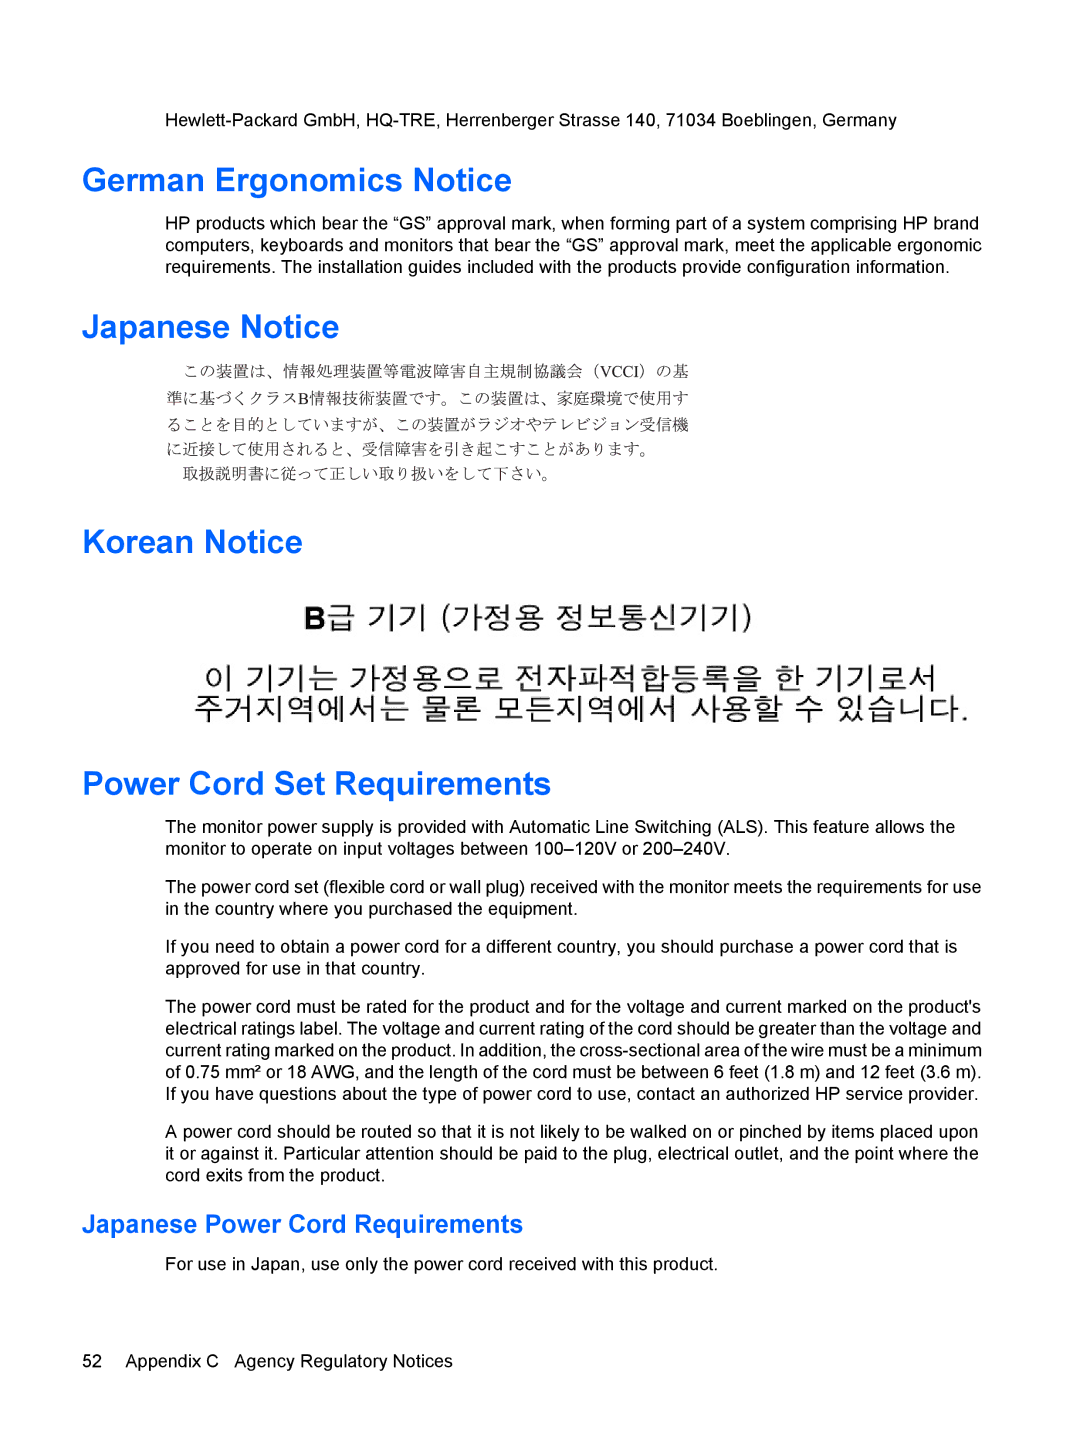 HP L1945WV, L2245W, L2208W, L1908WM manual German Ergonomics Notice, Japanese Notice Korean Notice Power Cord Set Requirements 